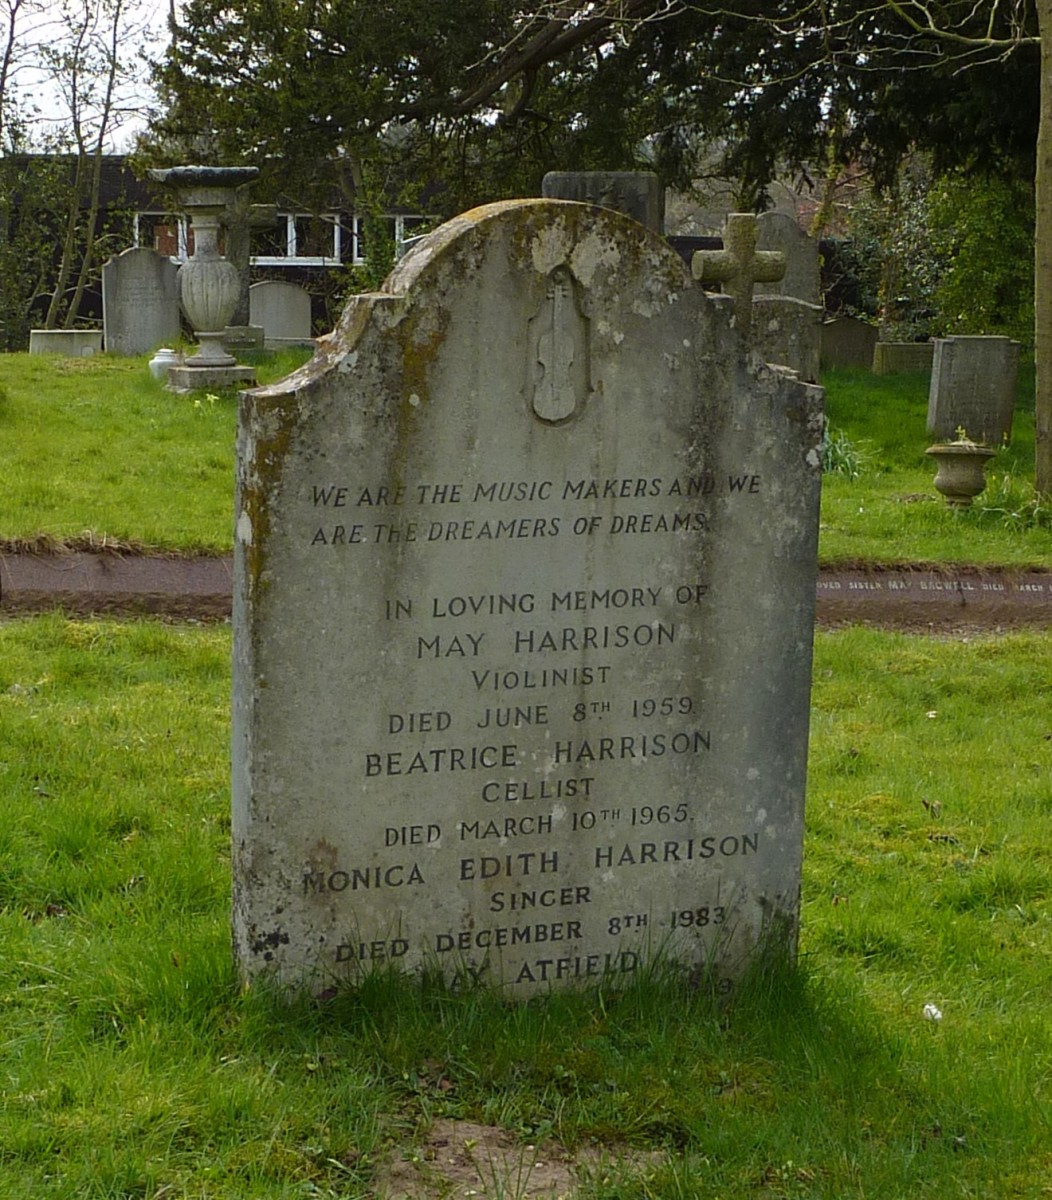 Beatrice Harrison's grave